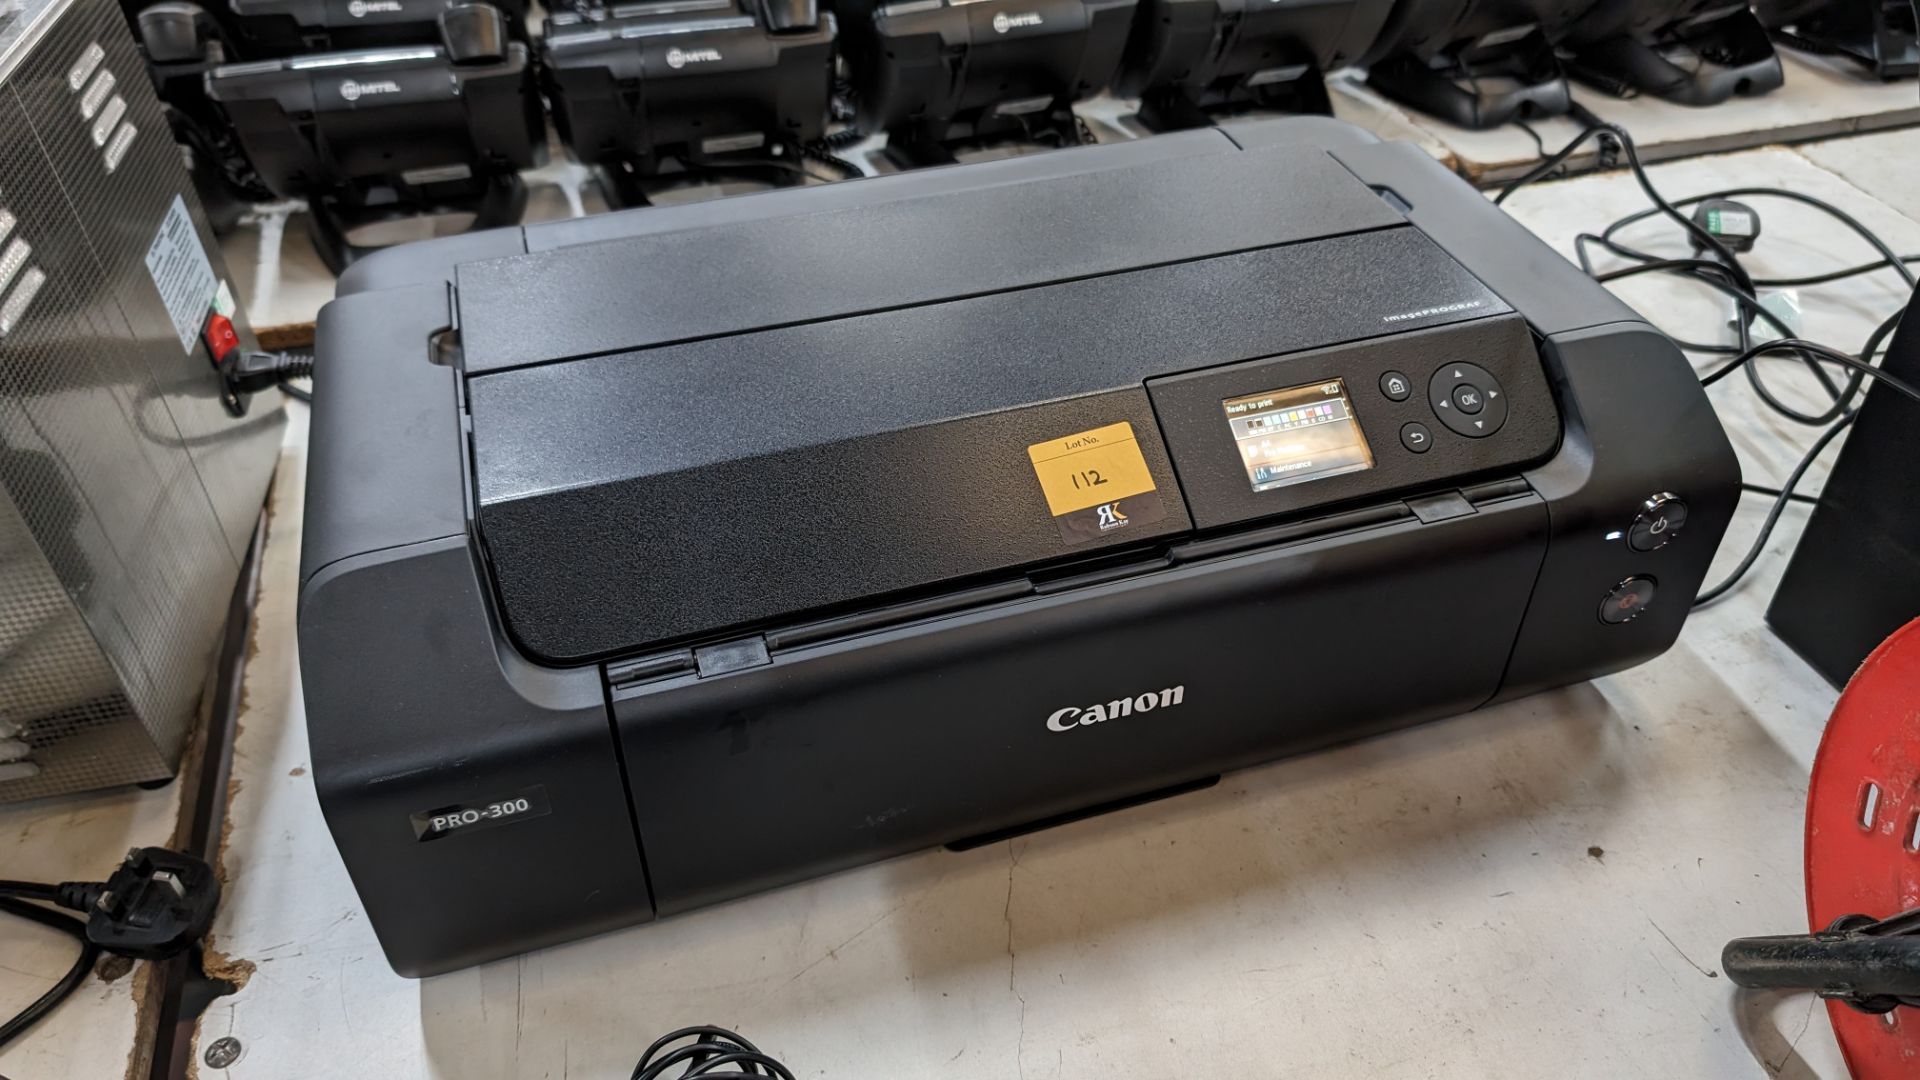 Canon Pro-300 ImagePROGRAF A3 printer - Image 2 of 12